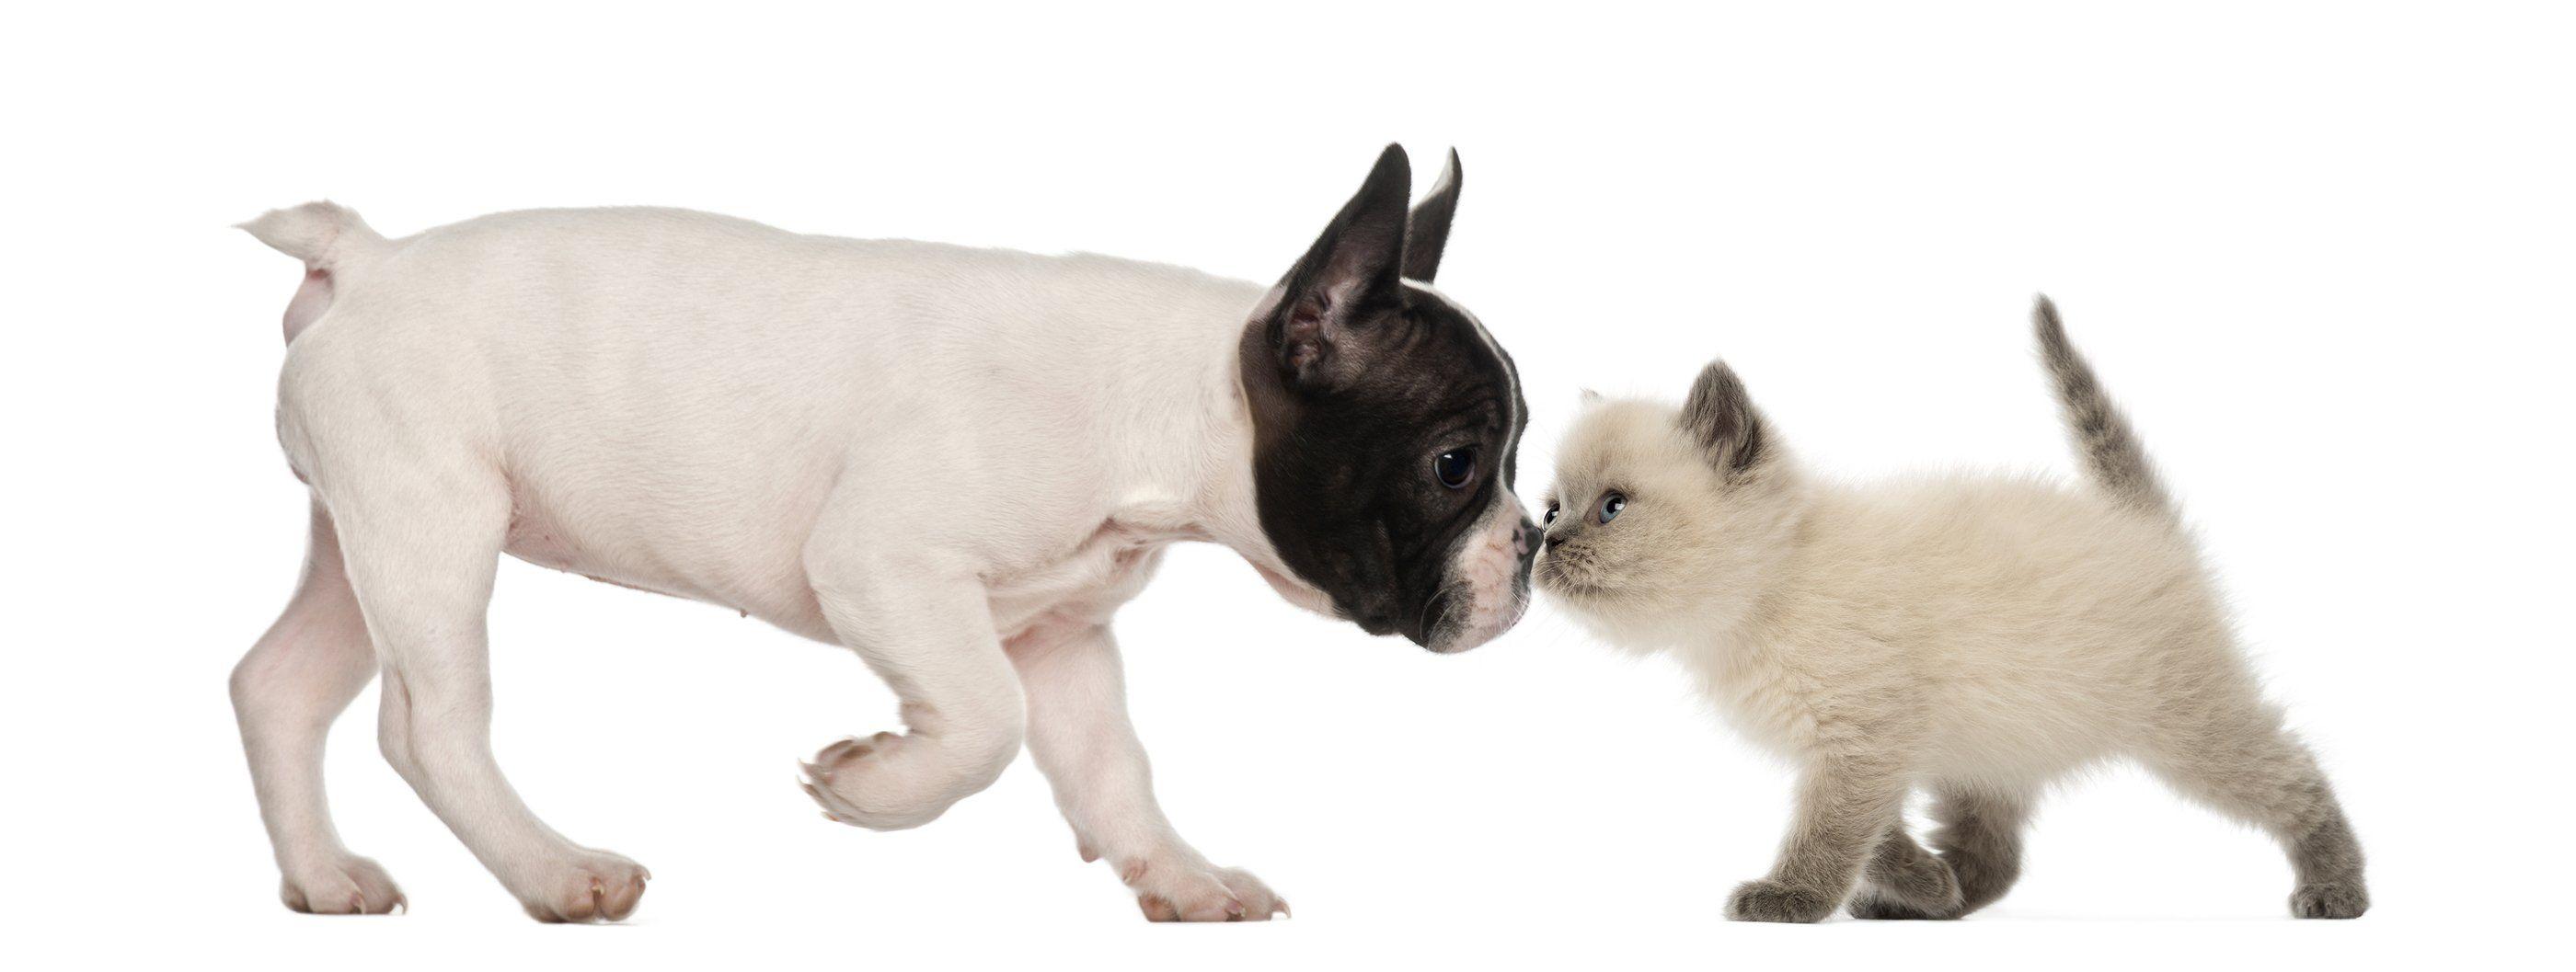 BULLDOG dog dogs canine puppy baby kitten cat wallpaper